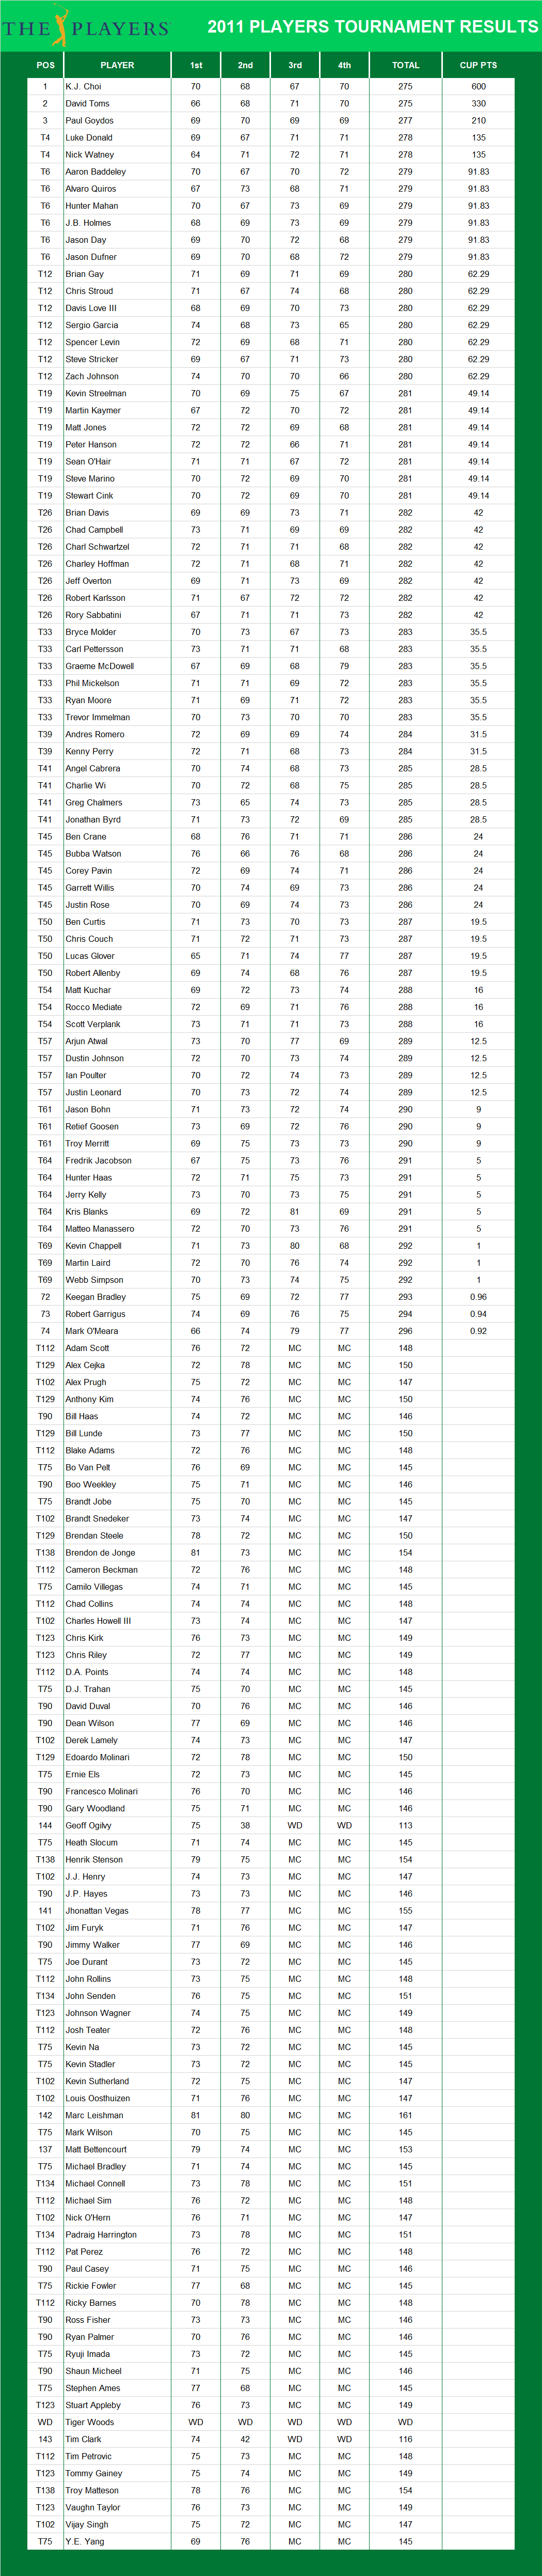 2011 Players Championship PGA Results